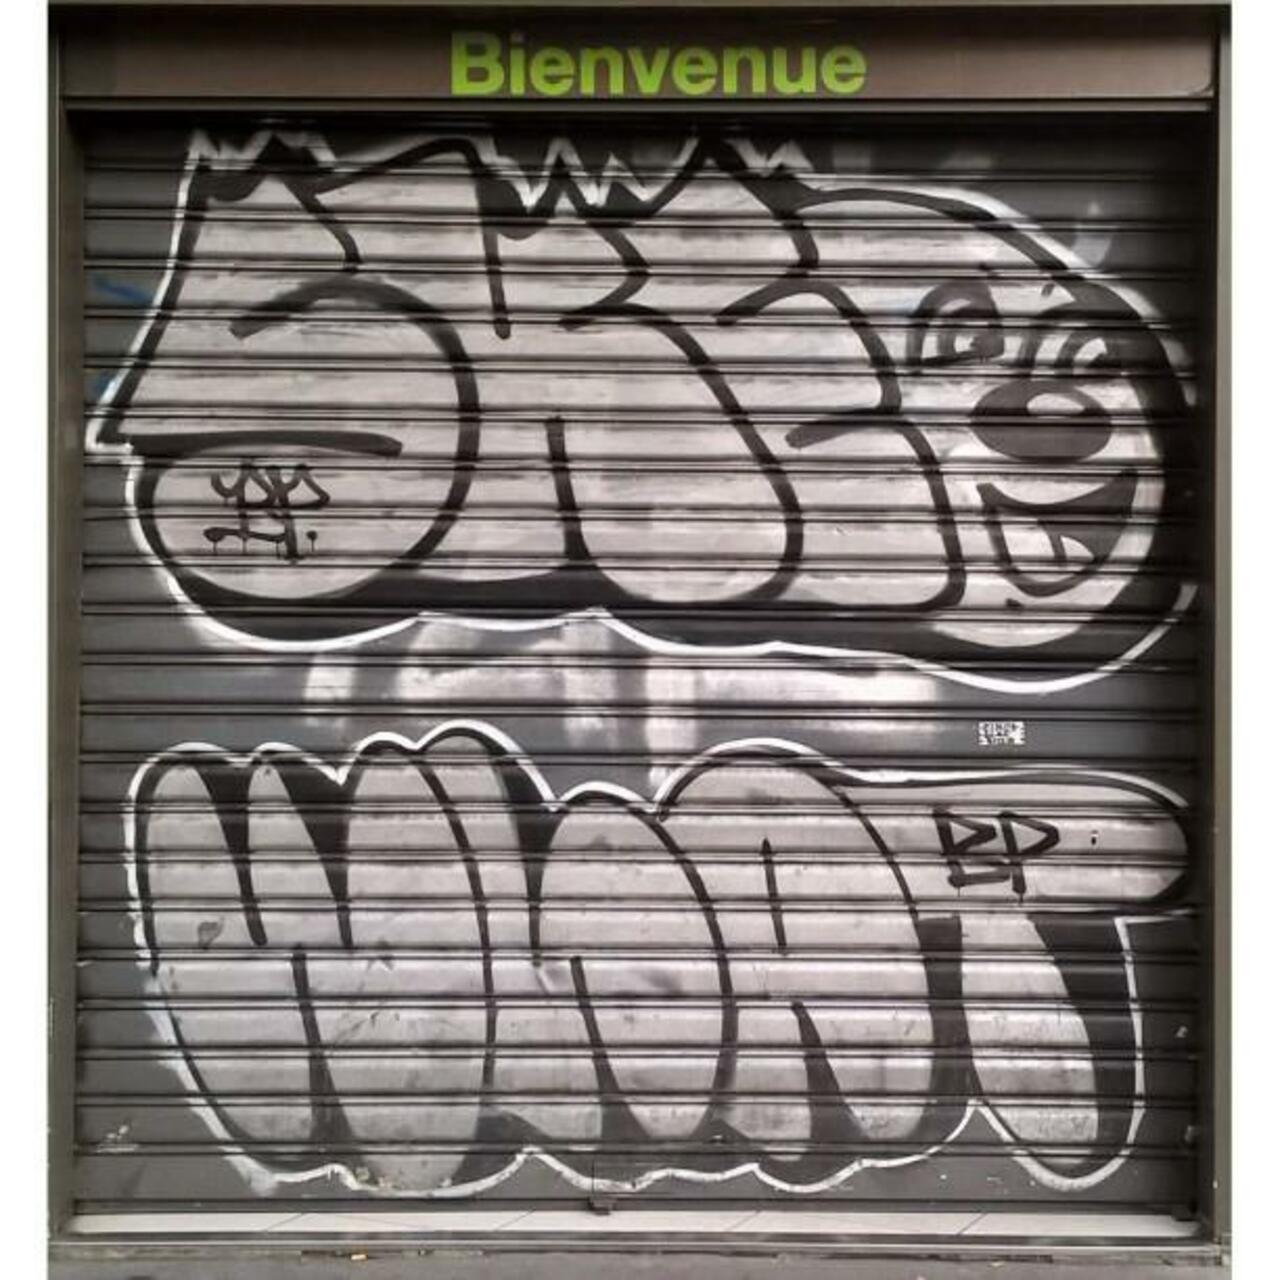 SKEO & WHAT
#streetart #graffiti #graff #art #fatcap #bombing #sprayart #spraycanart #wallart #handstyle #lettering… http://t.co/Bn2f9QXIc9